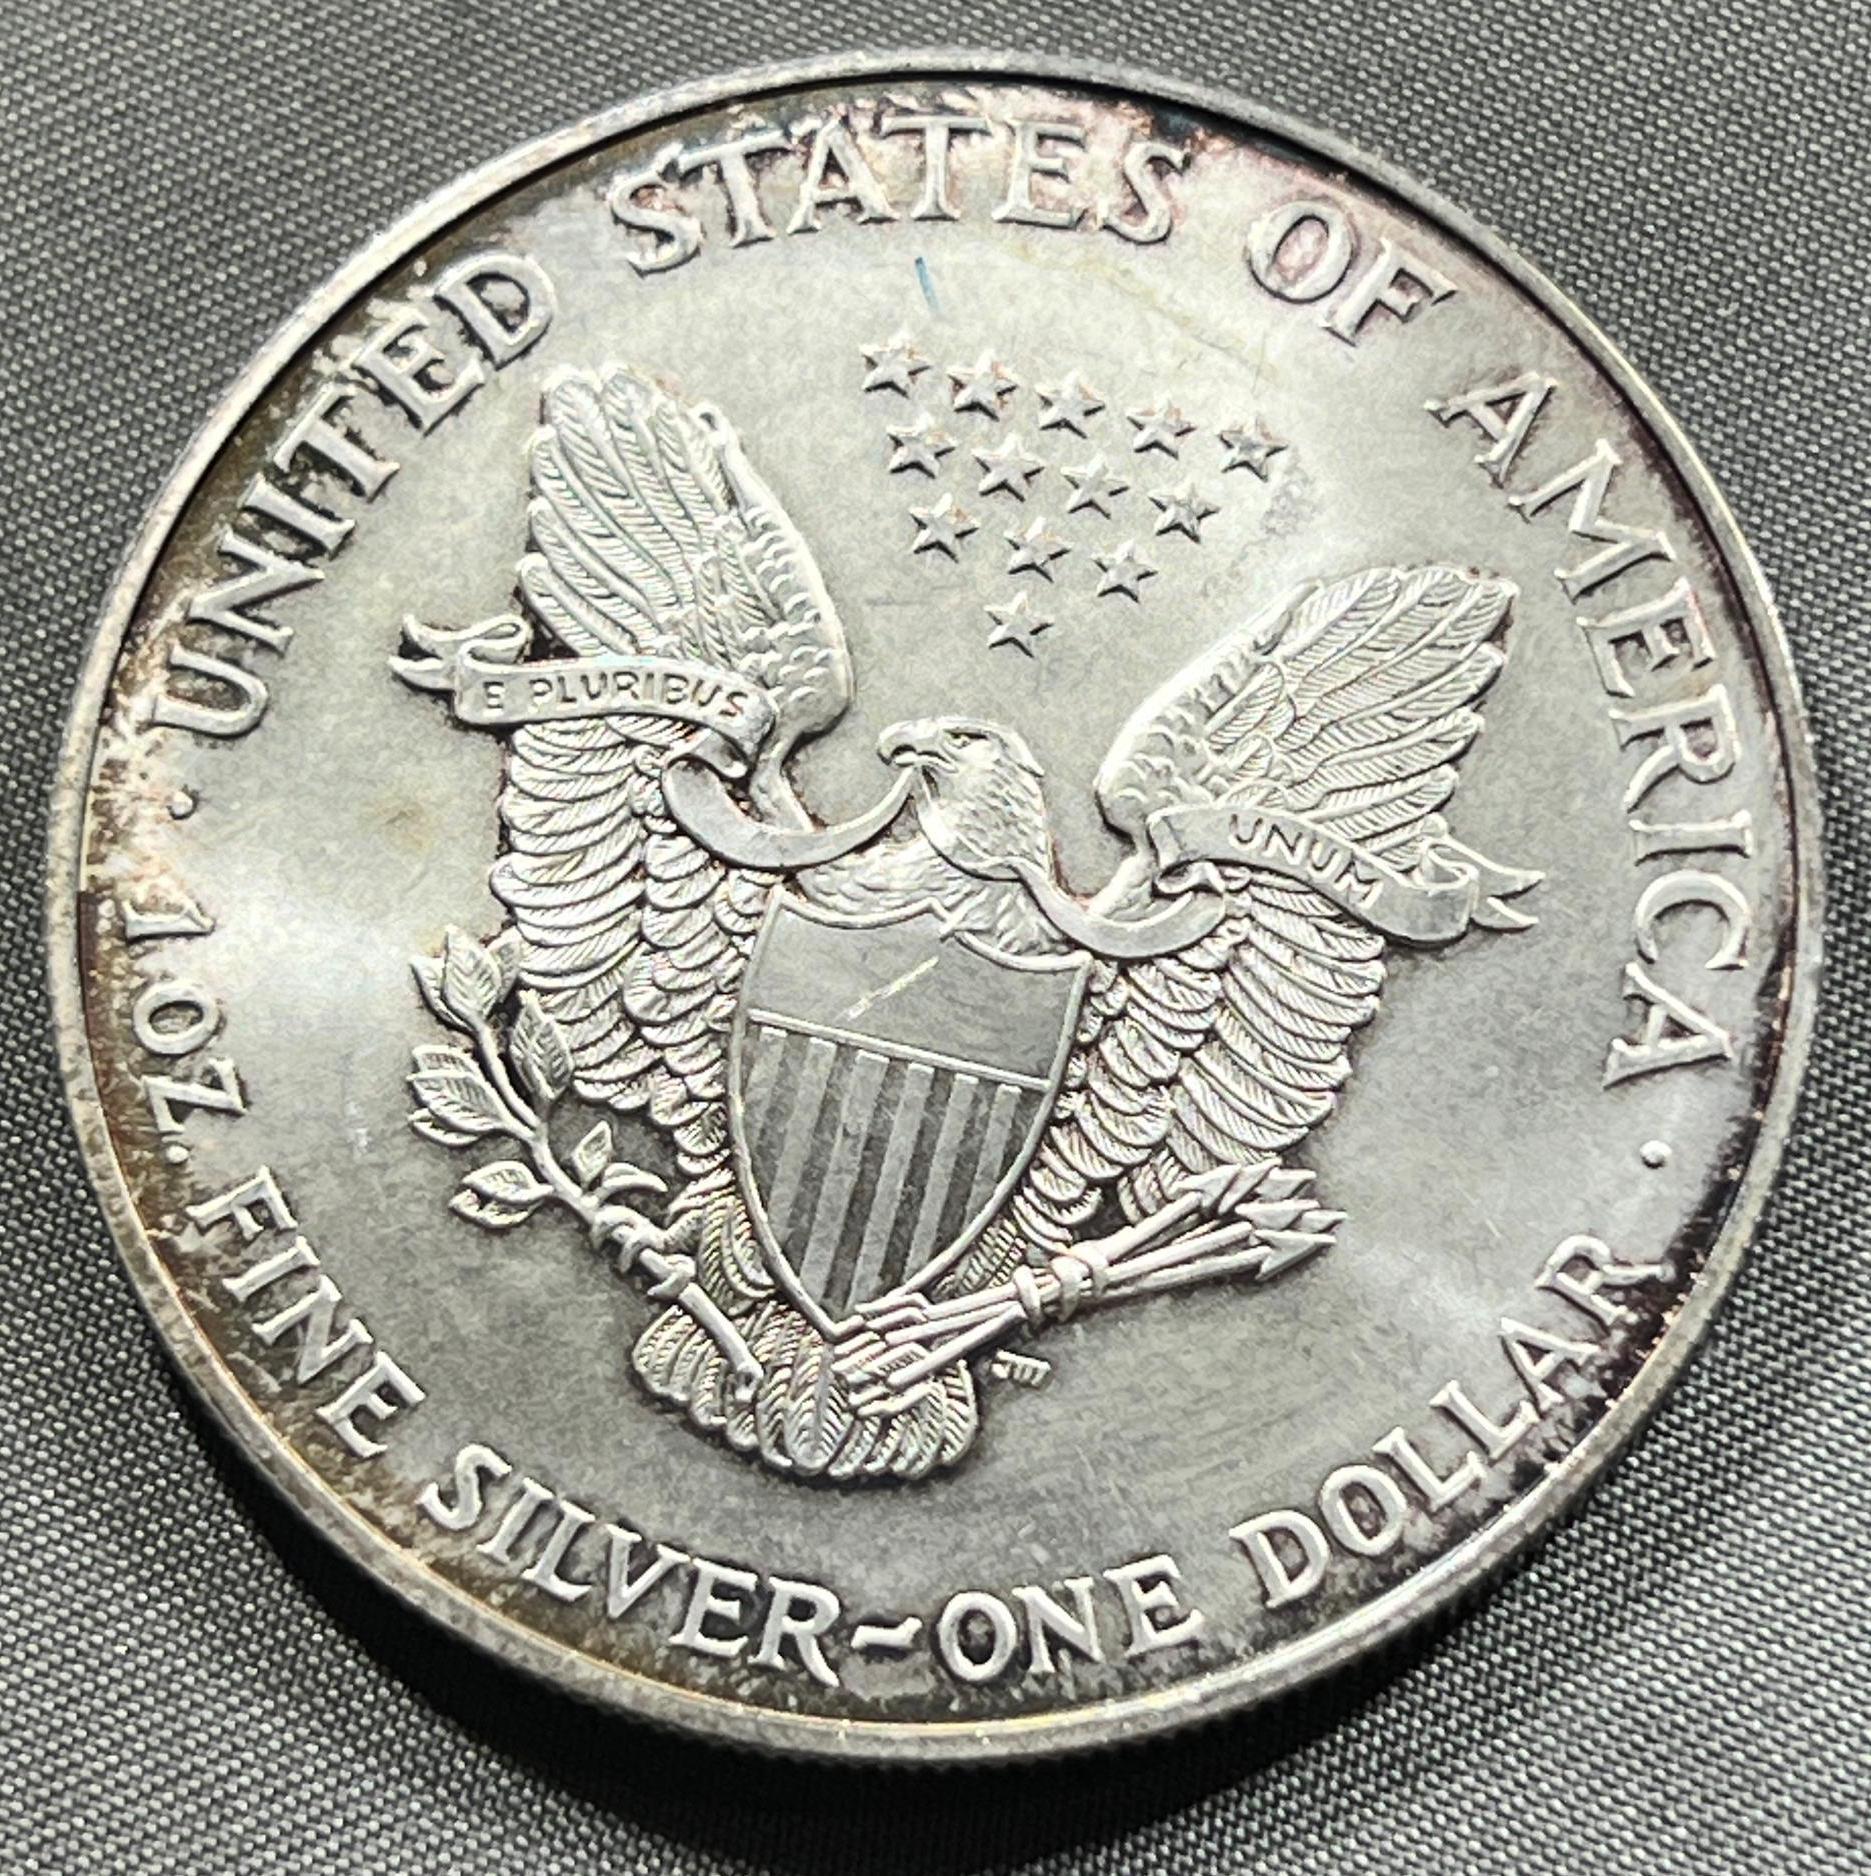 1996 US Silver Eagle Dollar Coin, .999 Fine Silver